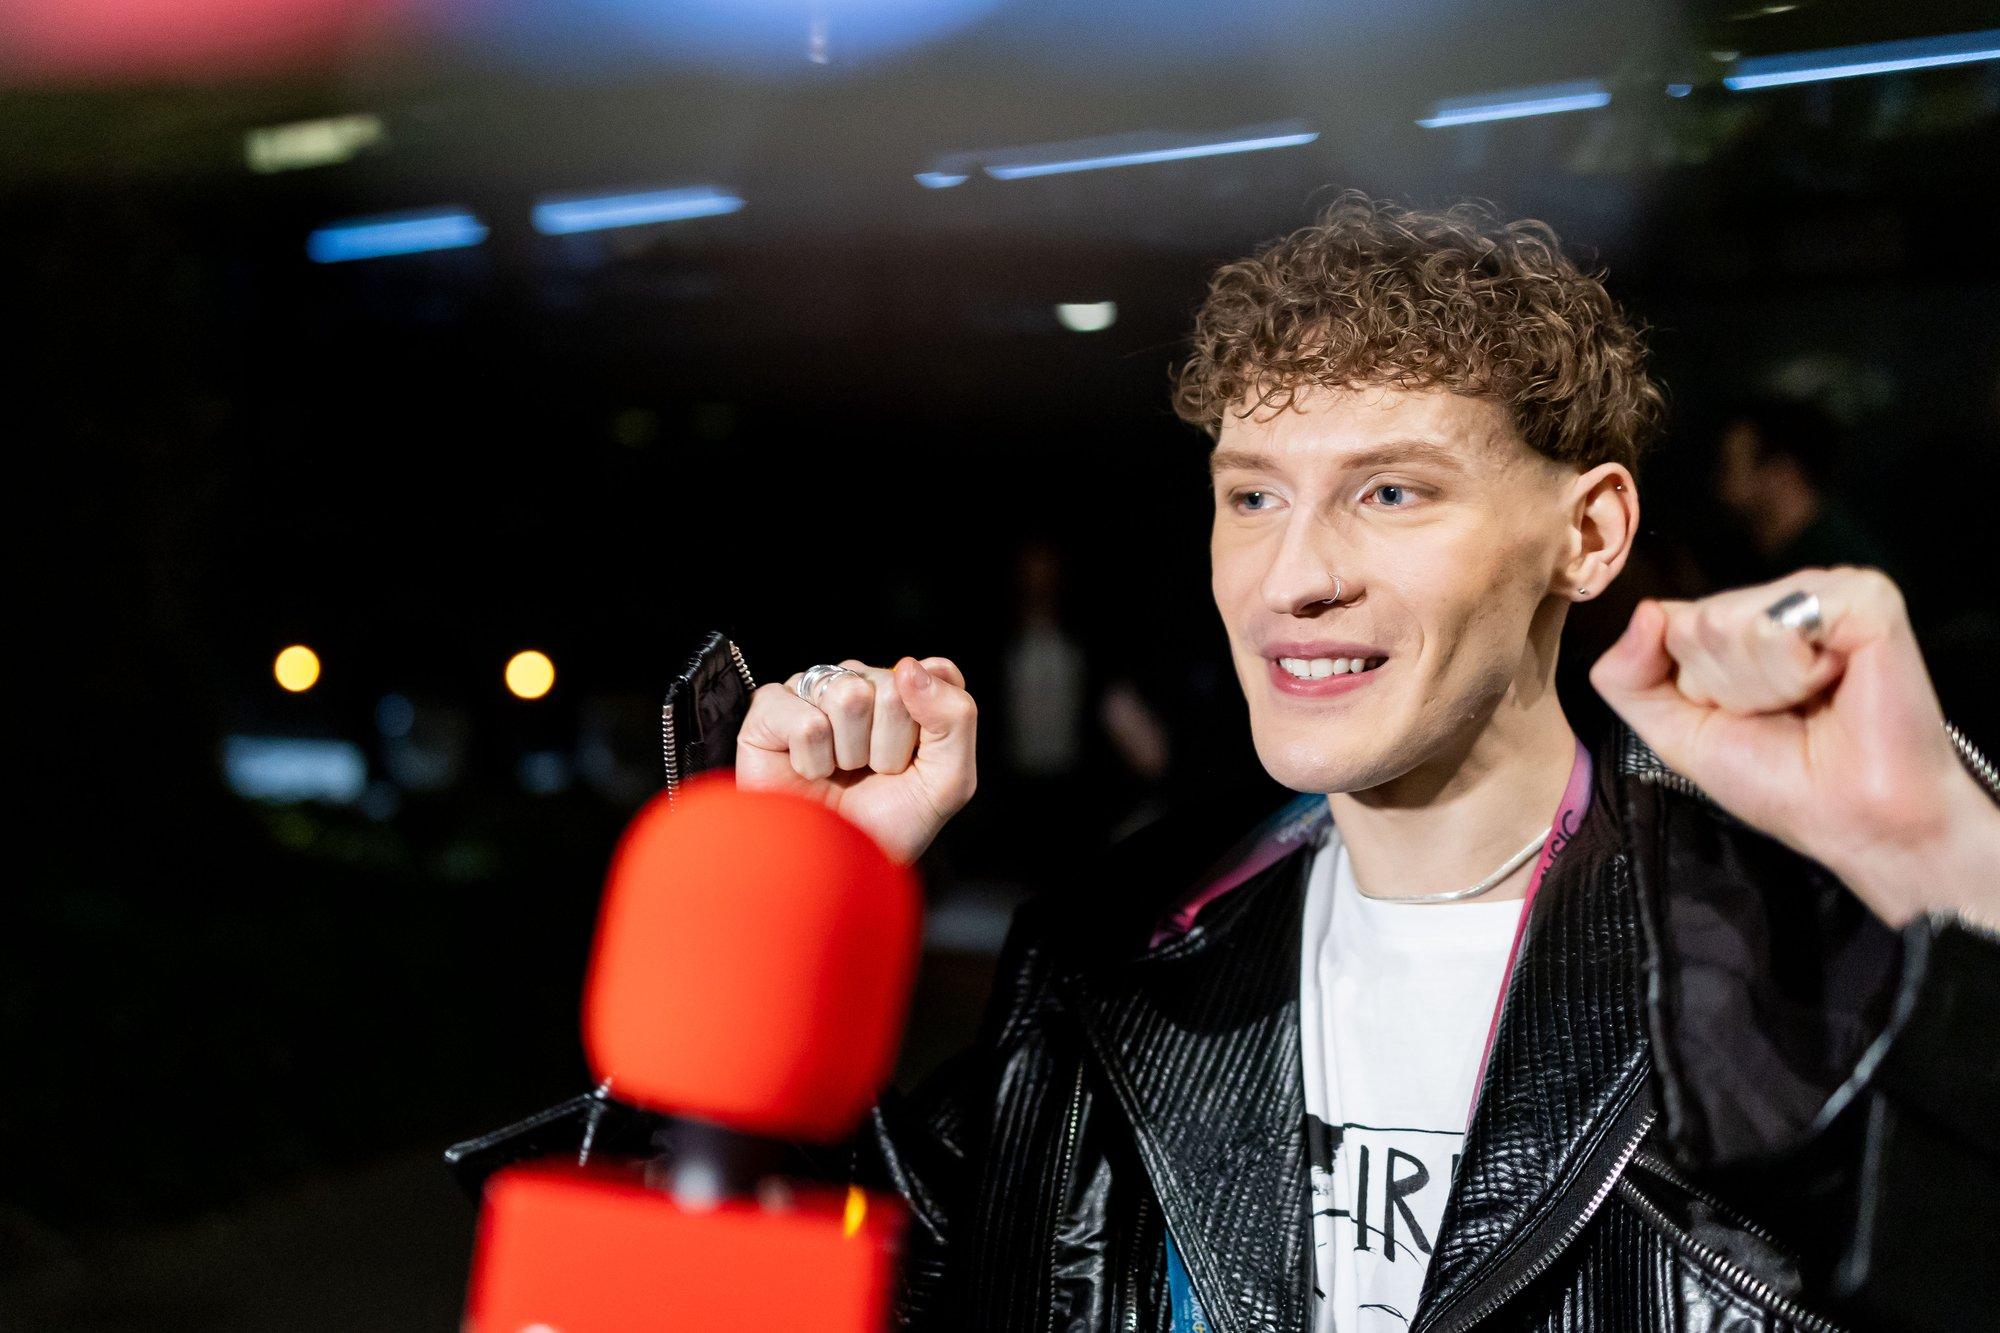 Lithuania’s representative Silvester Belt advances to Eurovision final